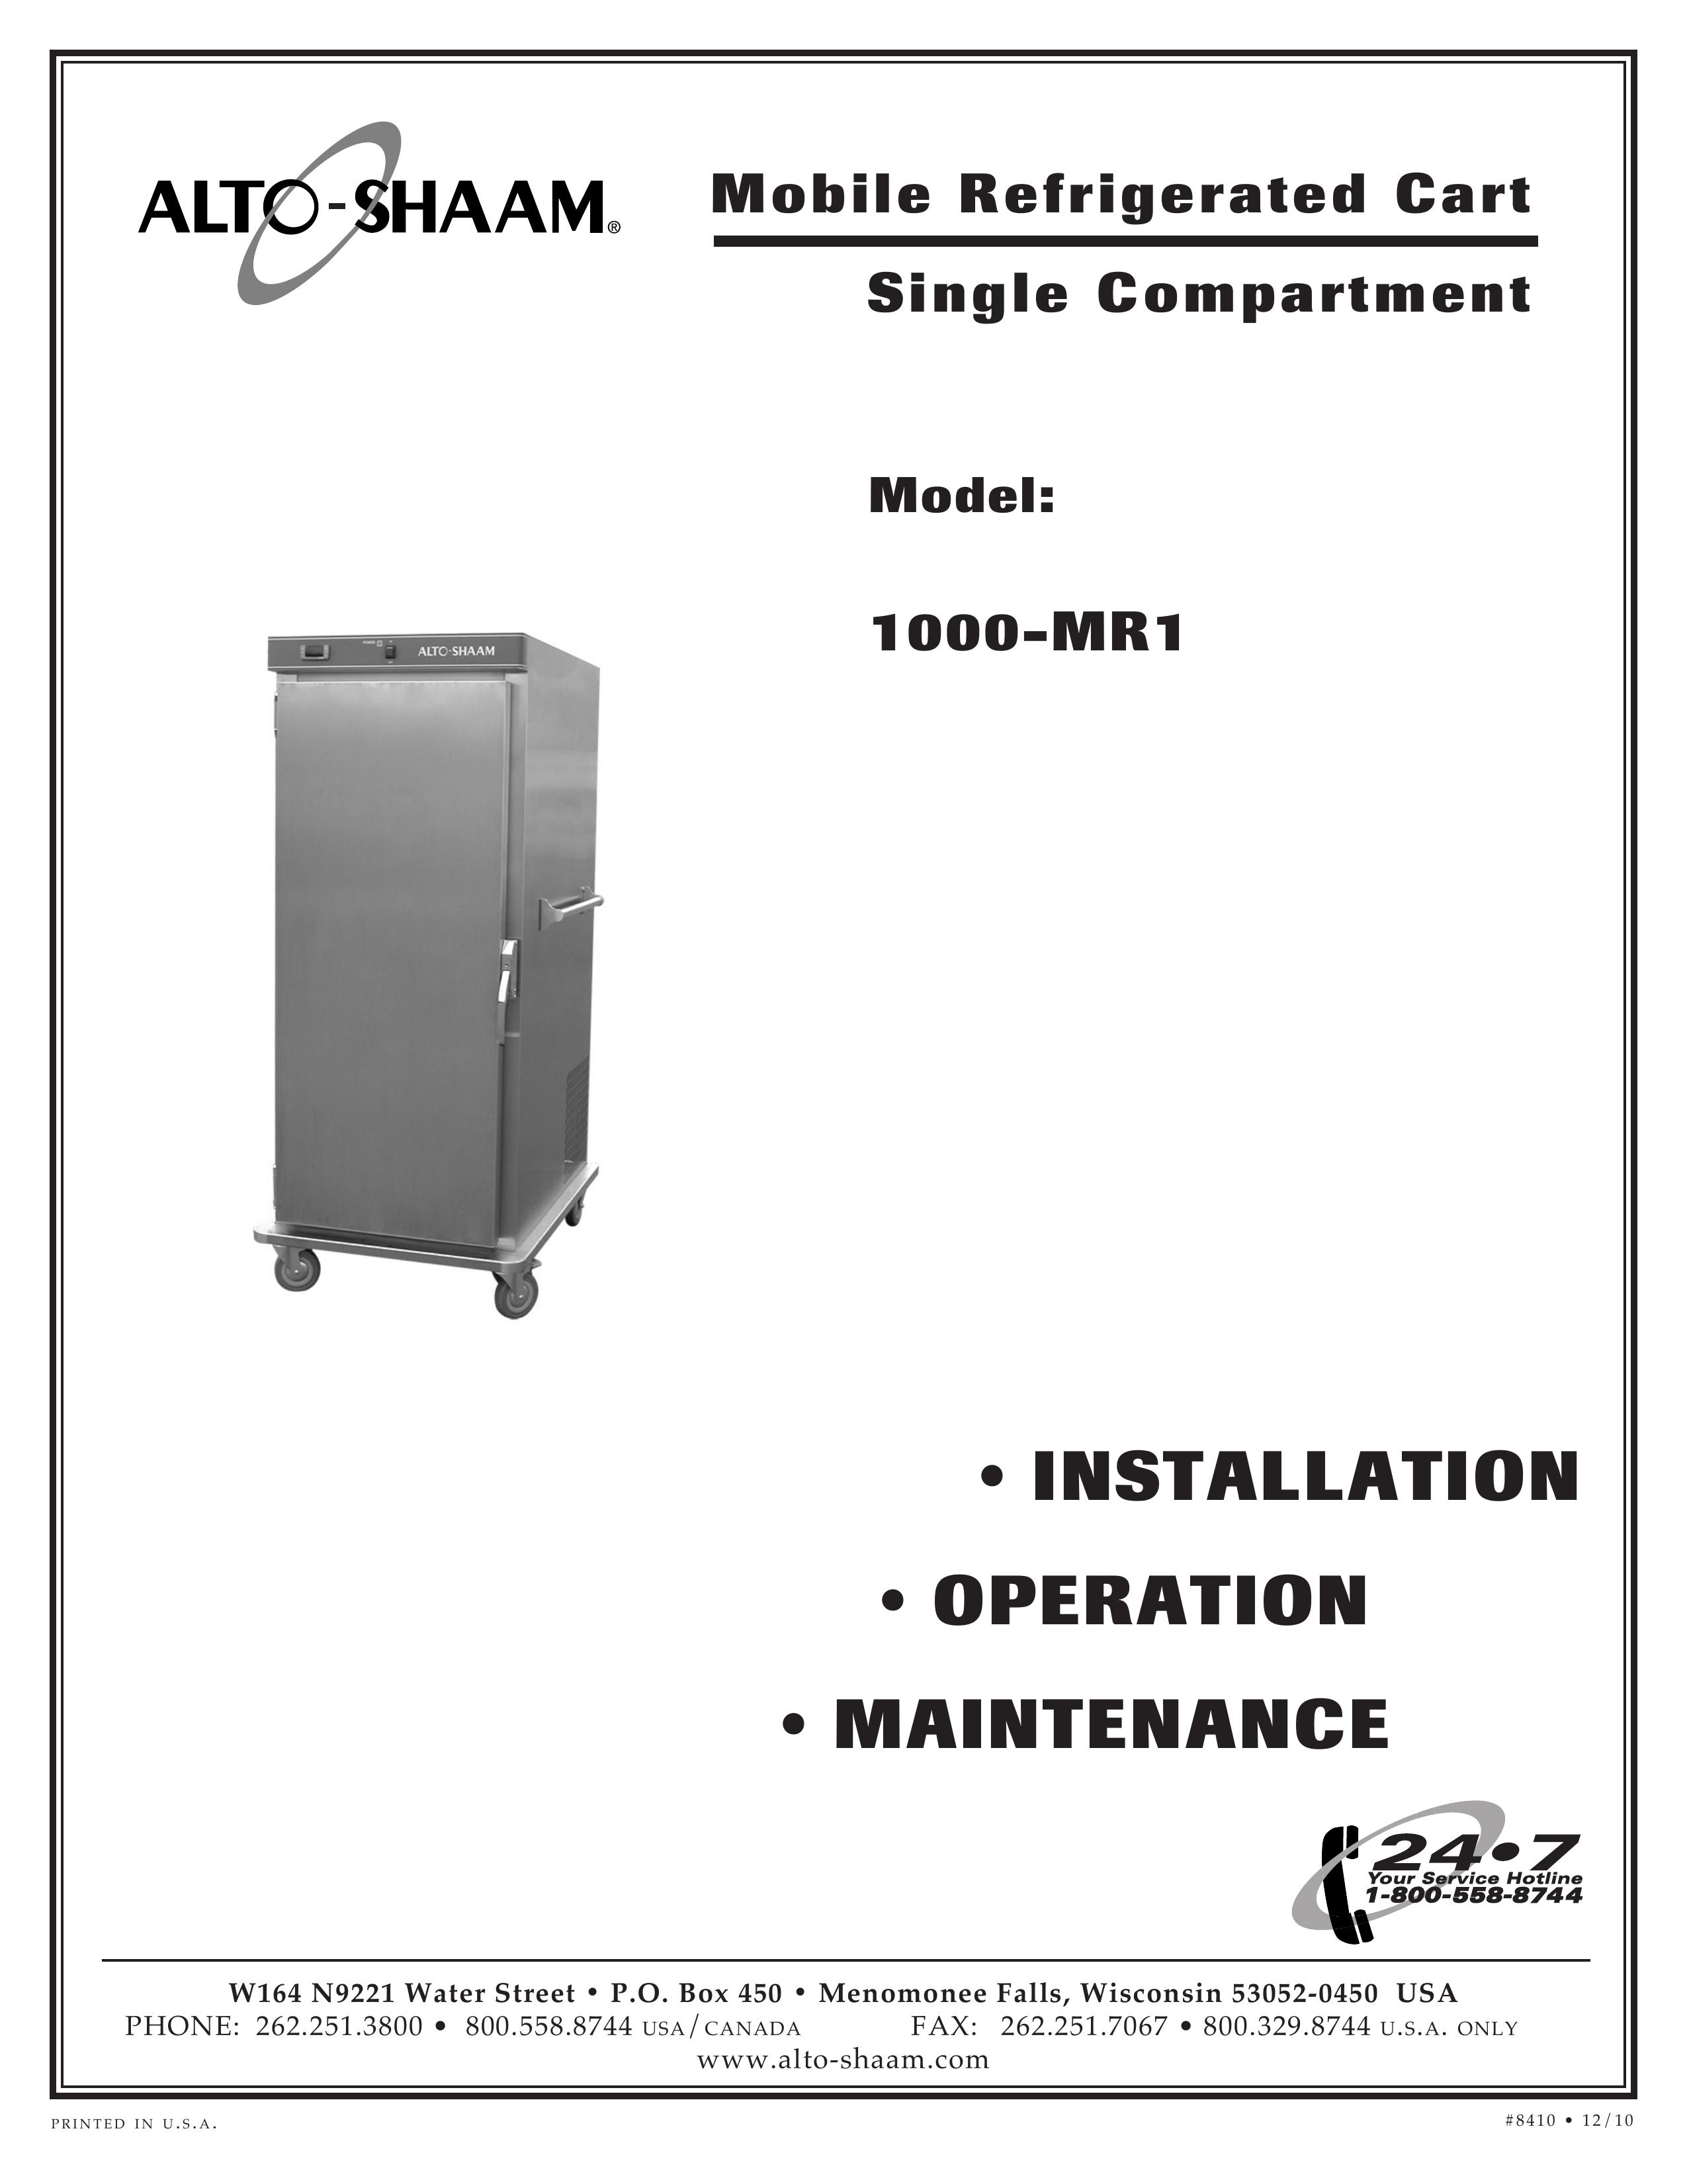 Alto-Shaam movile refrigerated cart single comartment Refrigerator User Manual